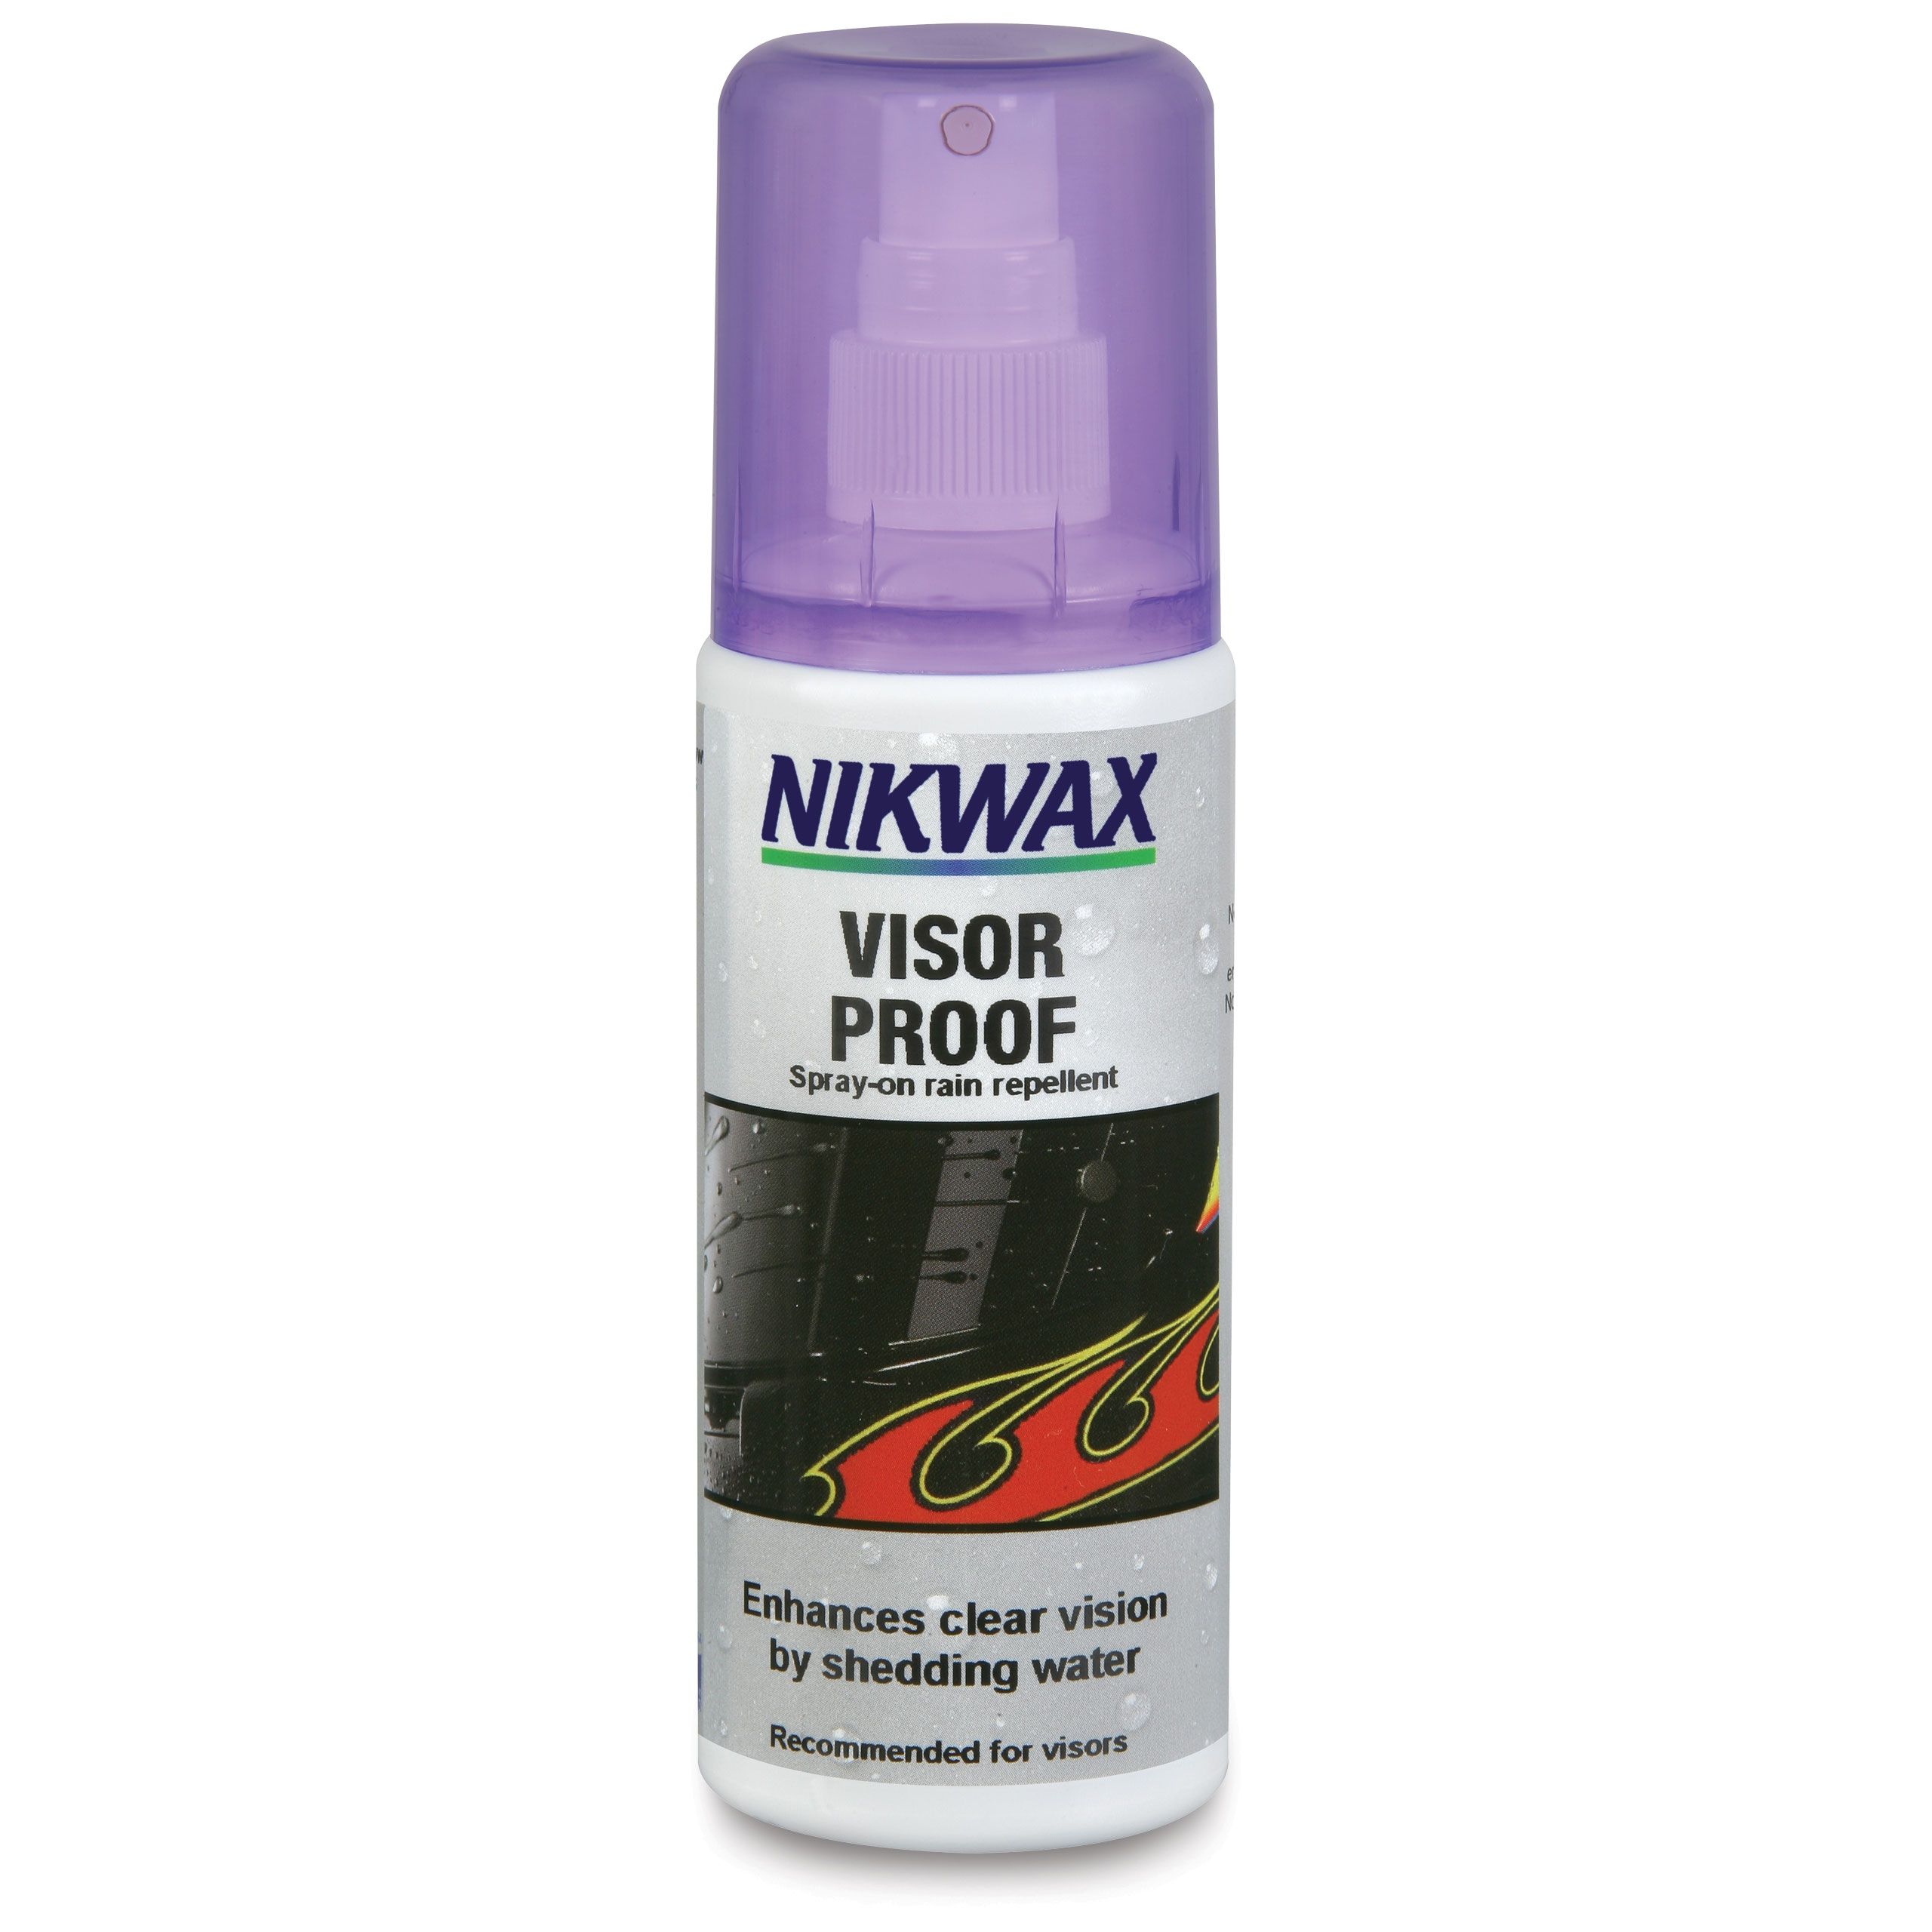 Nikwax Visor Proof Spray On Water Repellent